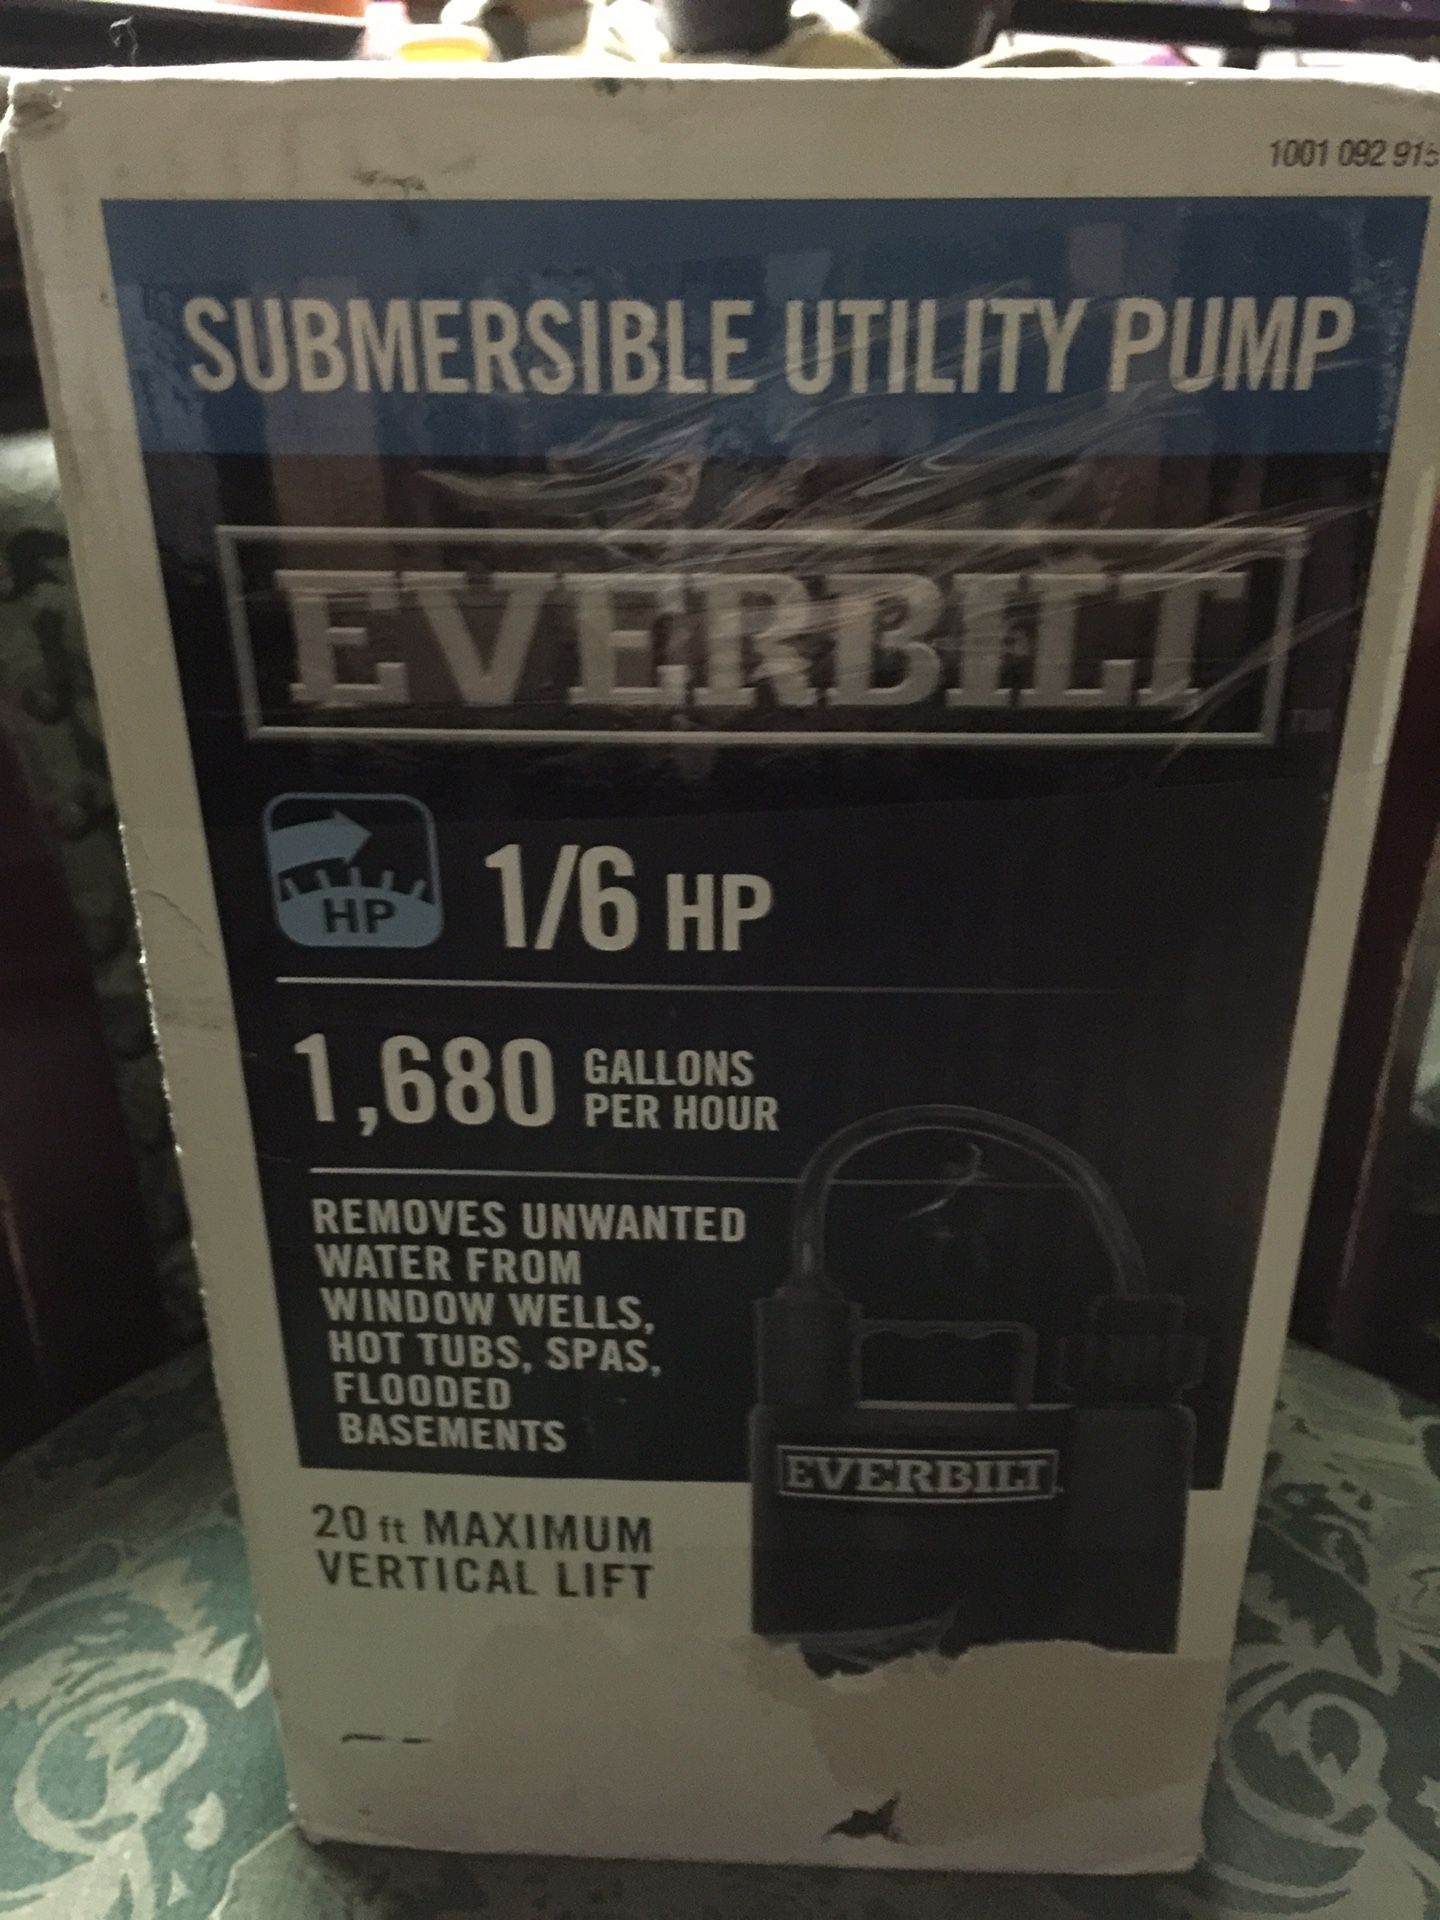 Everbolt submersible utility pump